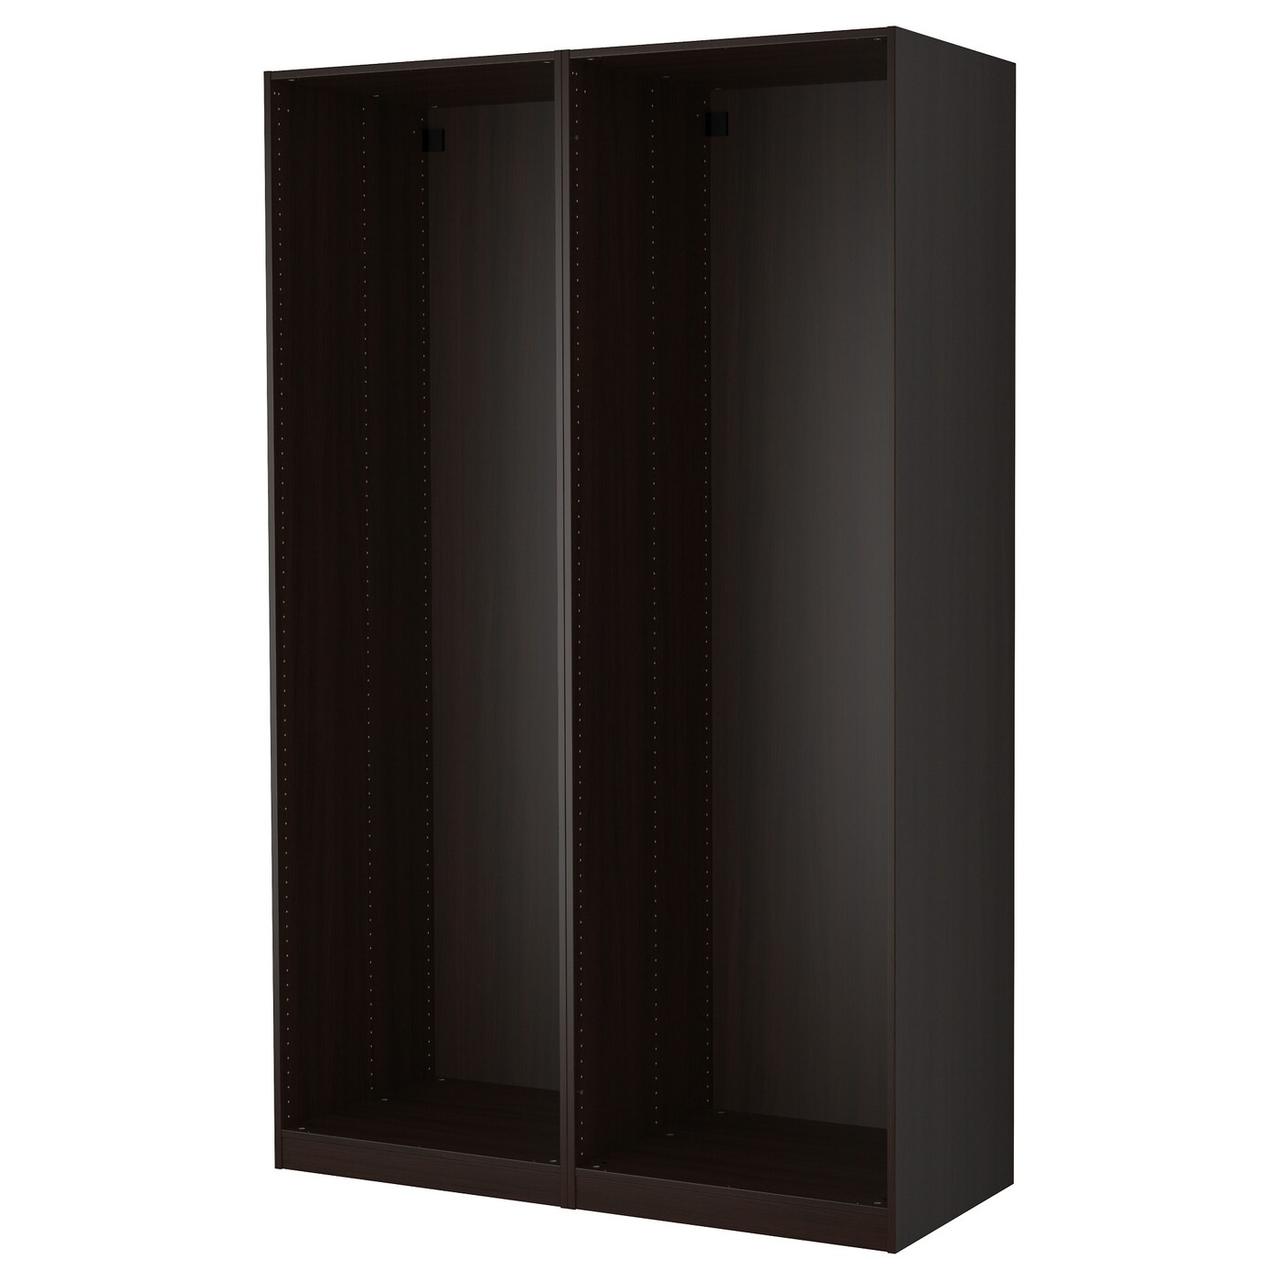 PAX ПАКС, 2 каркаси гардероба, чорно-коричневий150x58x236 см